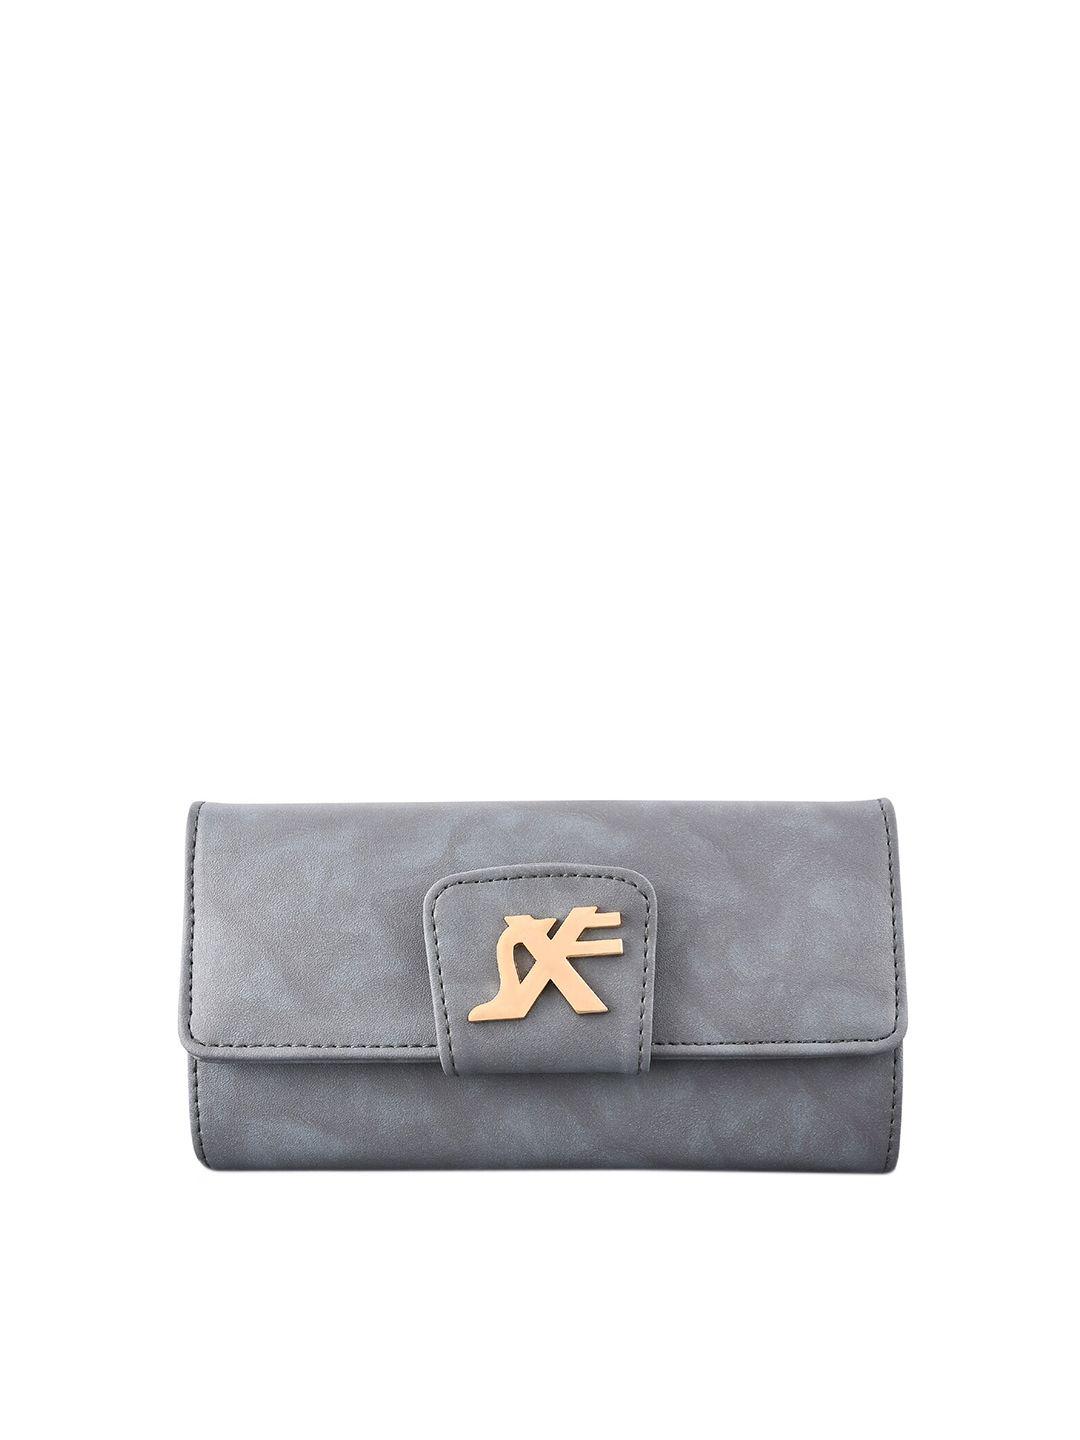 sxf speed x fashion grey purse clutch